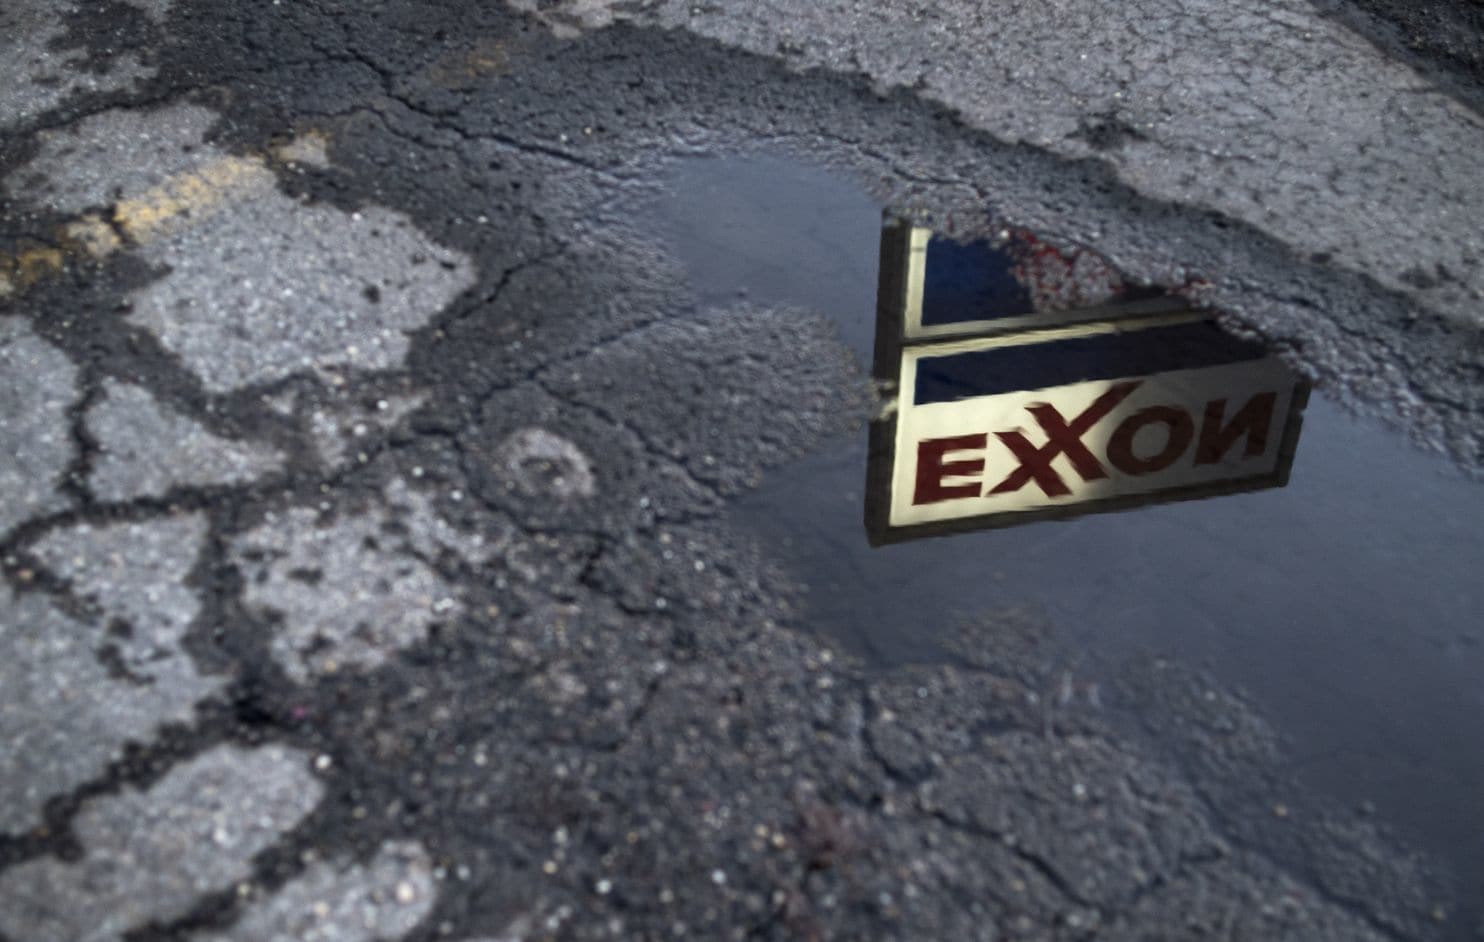 Old Exxon Logo - Why Venezuela Is Clashing With Its Old Foe Exxon Again - The ...